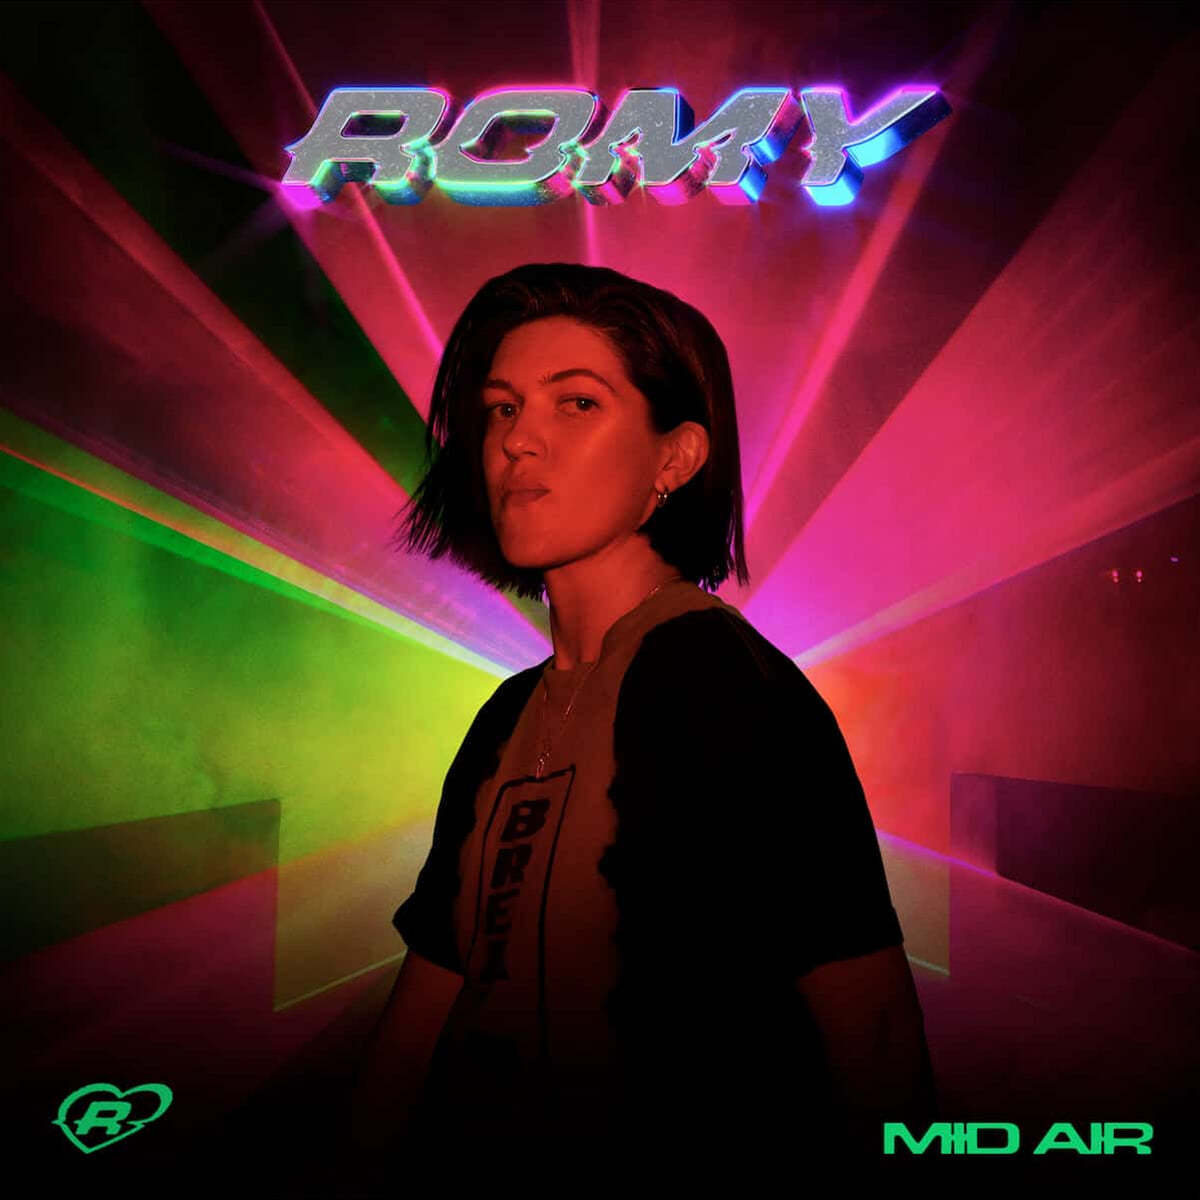 Romy (로미) - Mid Air [LP]